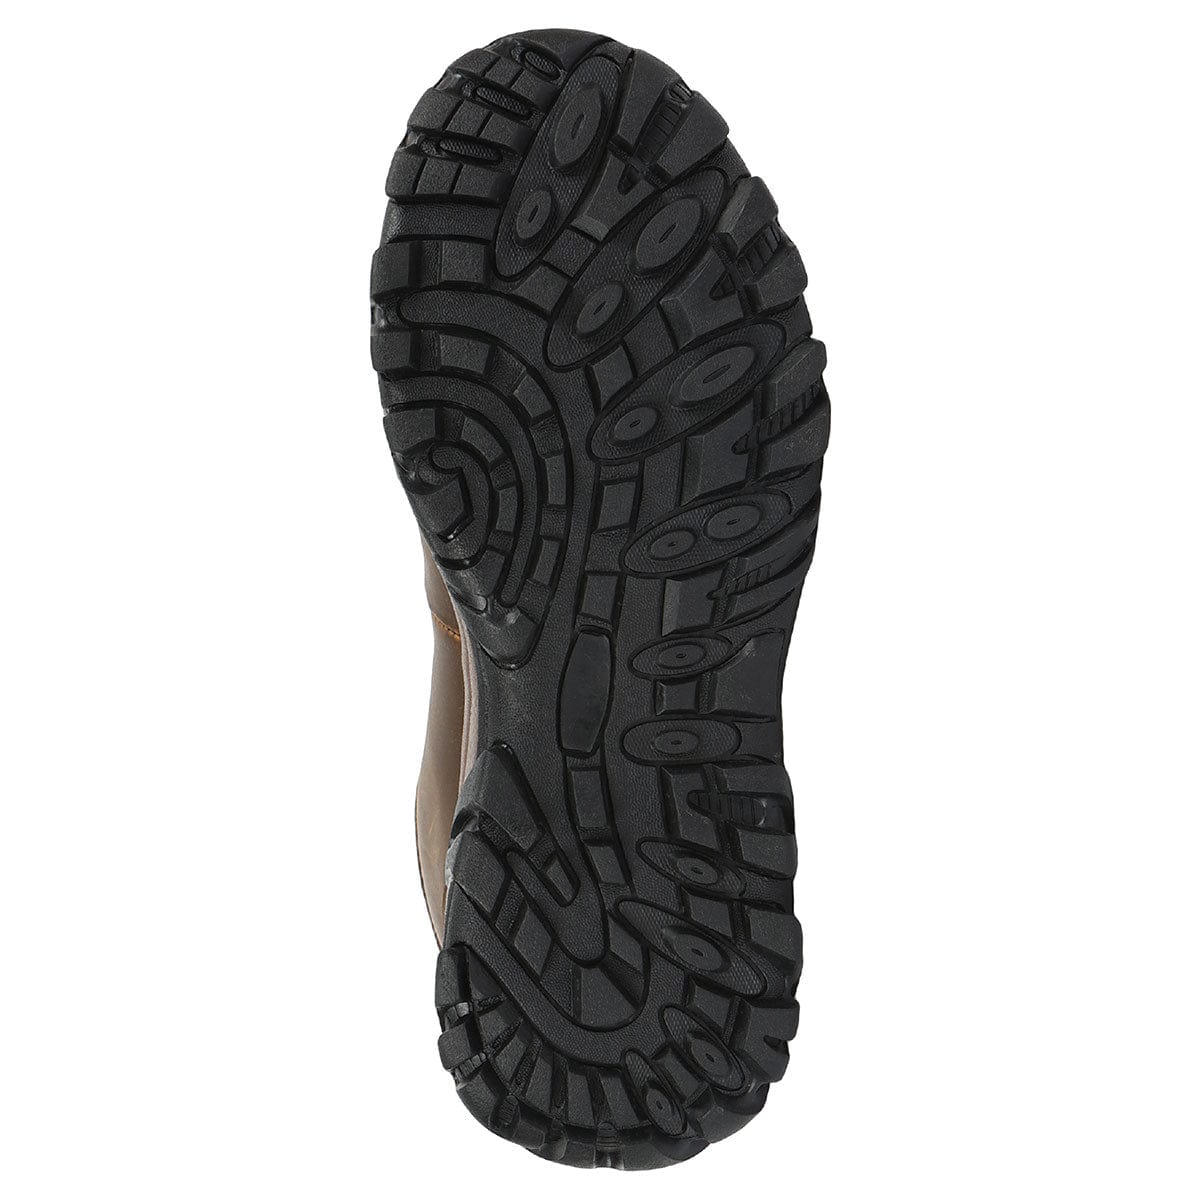 Northside Vista Ridge 6" Mid Waterproof Leather Hiking Boots